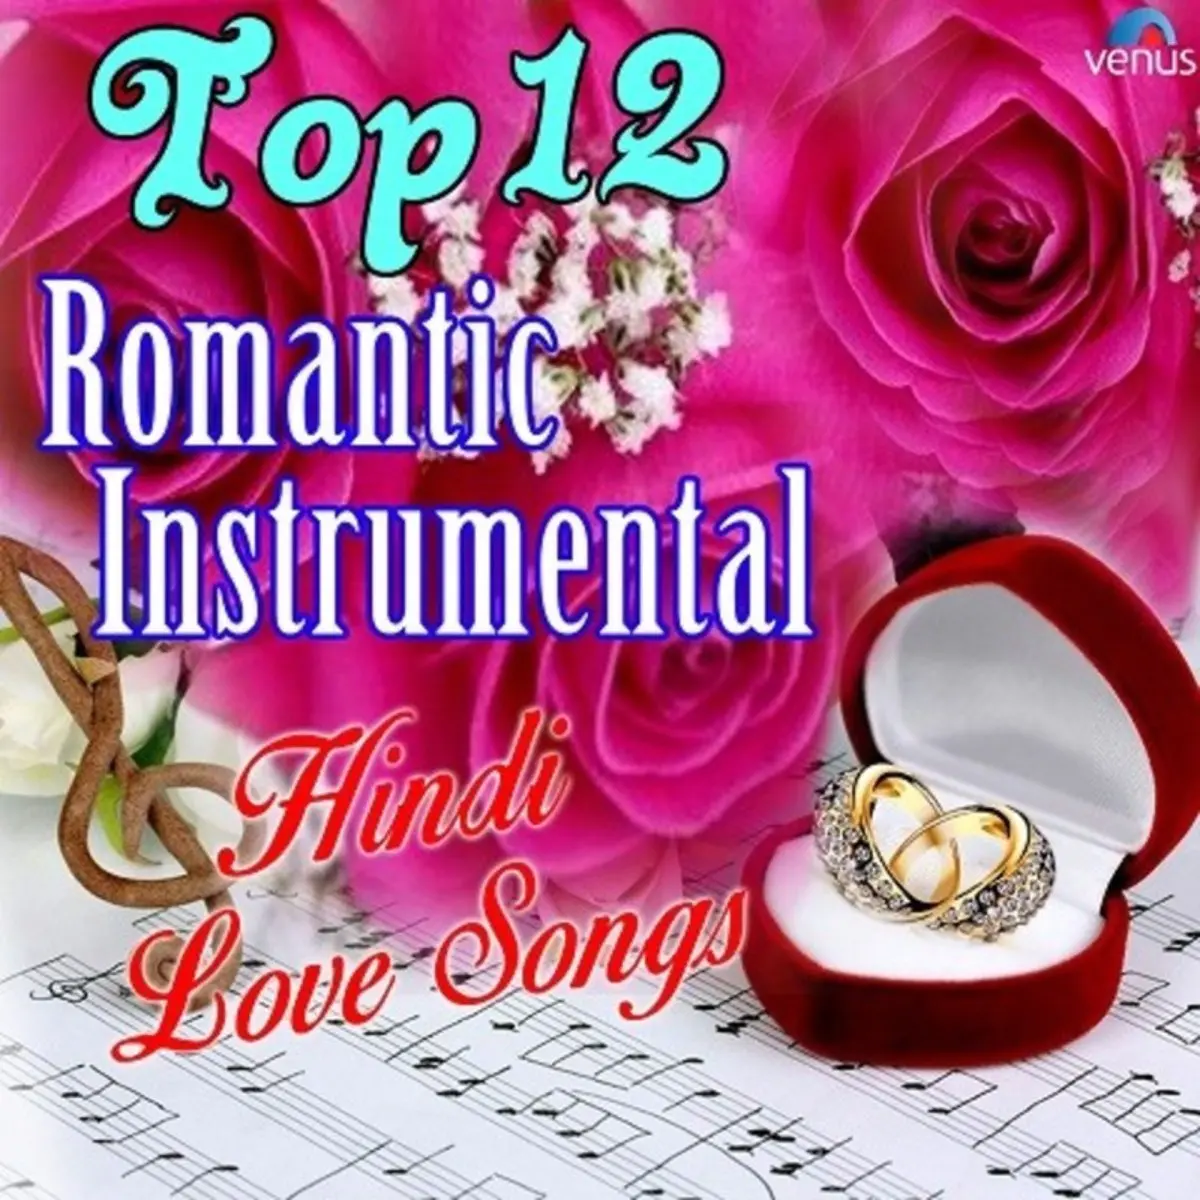 Hindi download songs zip old file free mp3 instrumental Download Zip